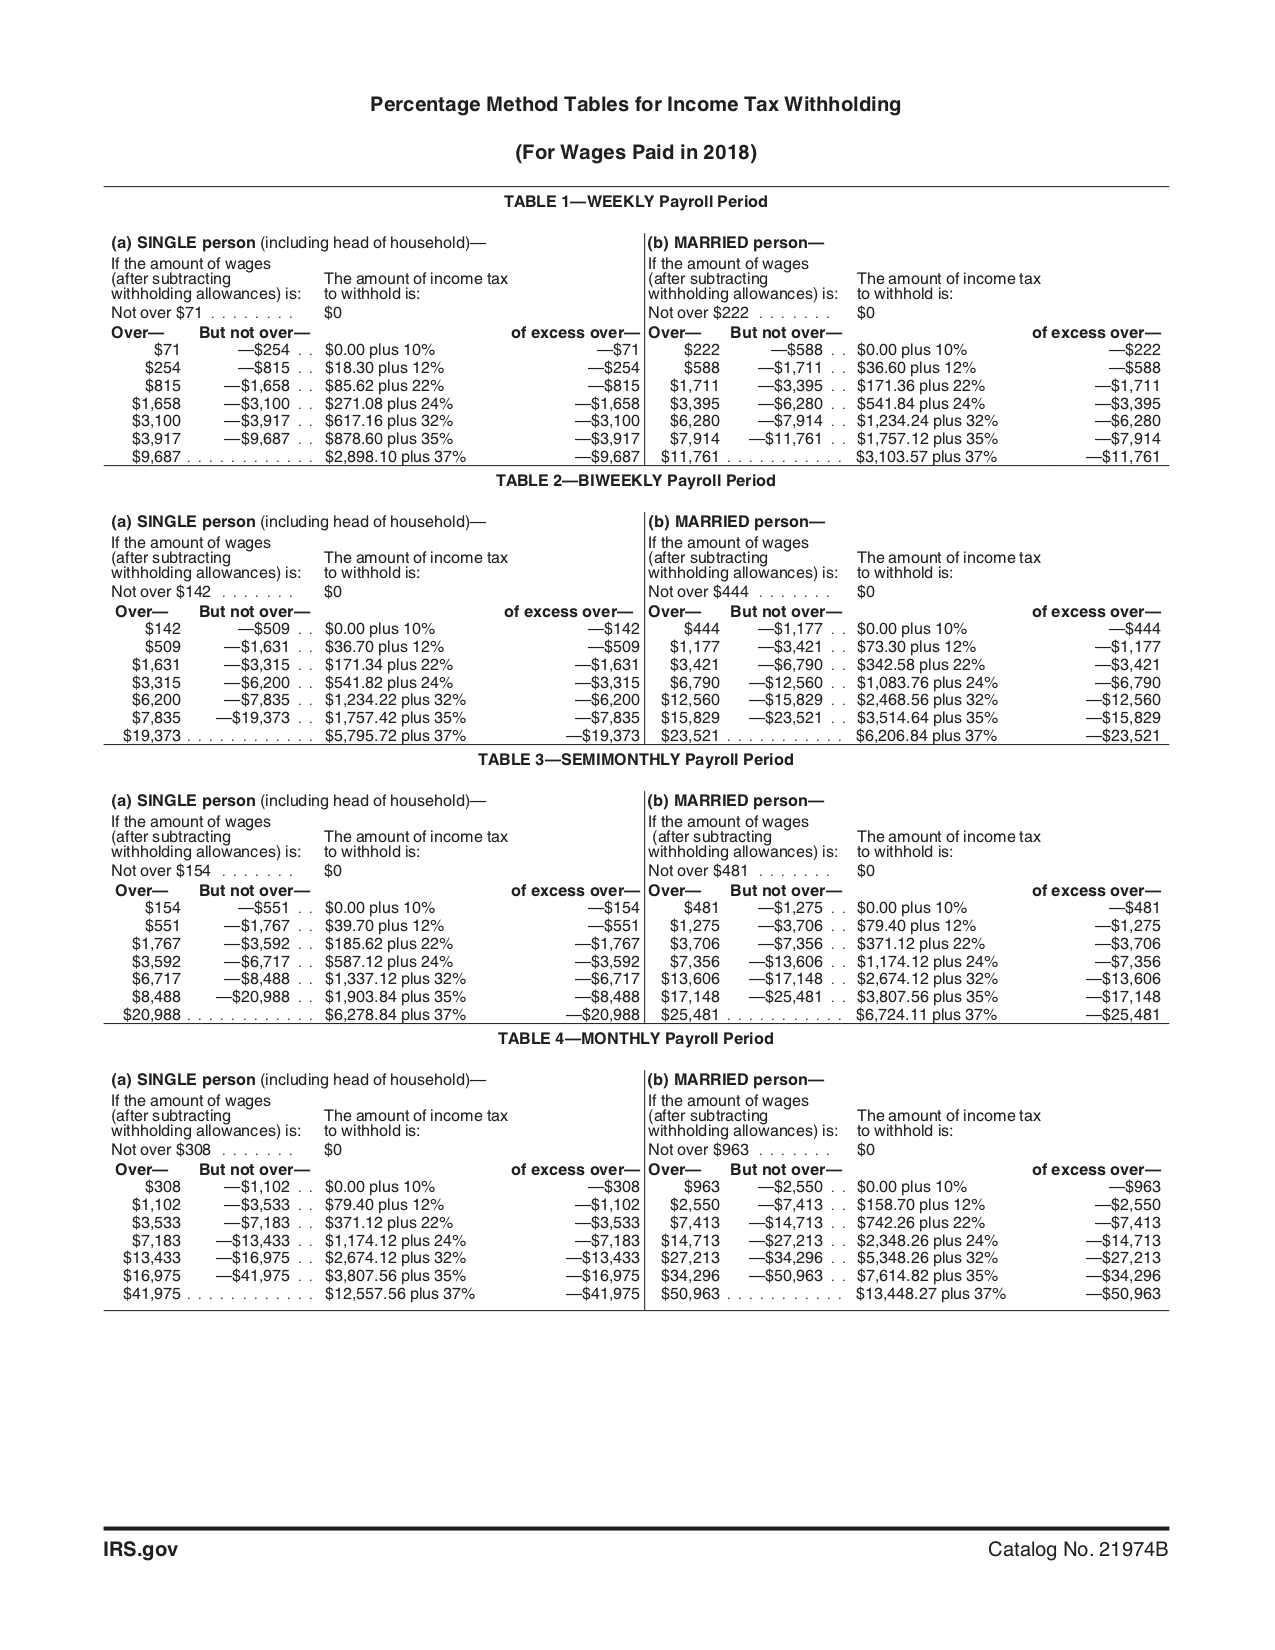 2017 Tax Tables Irs | Brokeasshome.com1275 x 1650